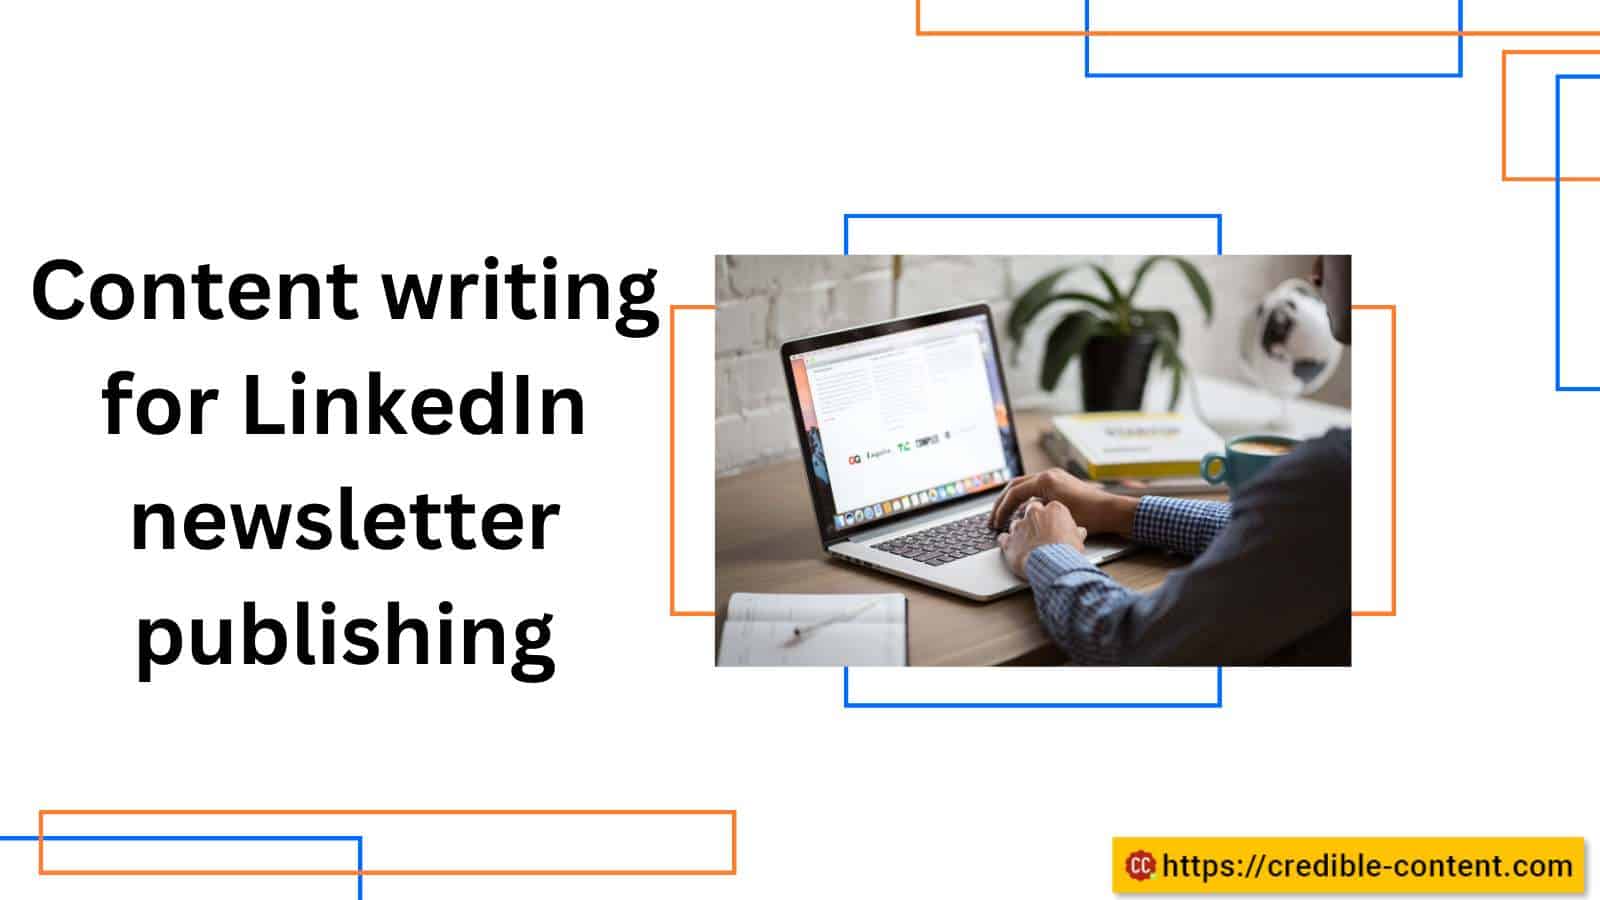 Content writing for LinkedIn newsletter publishing